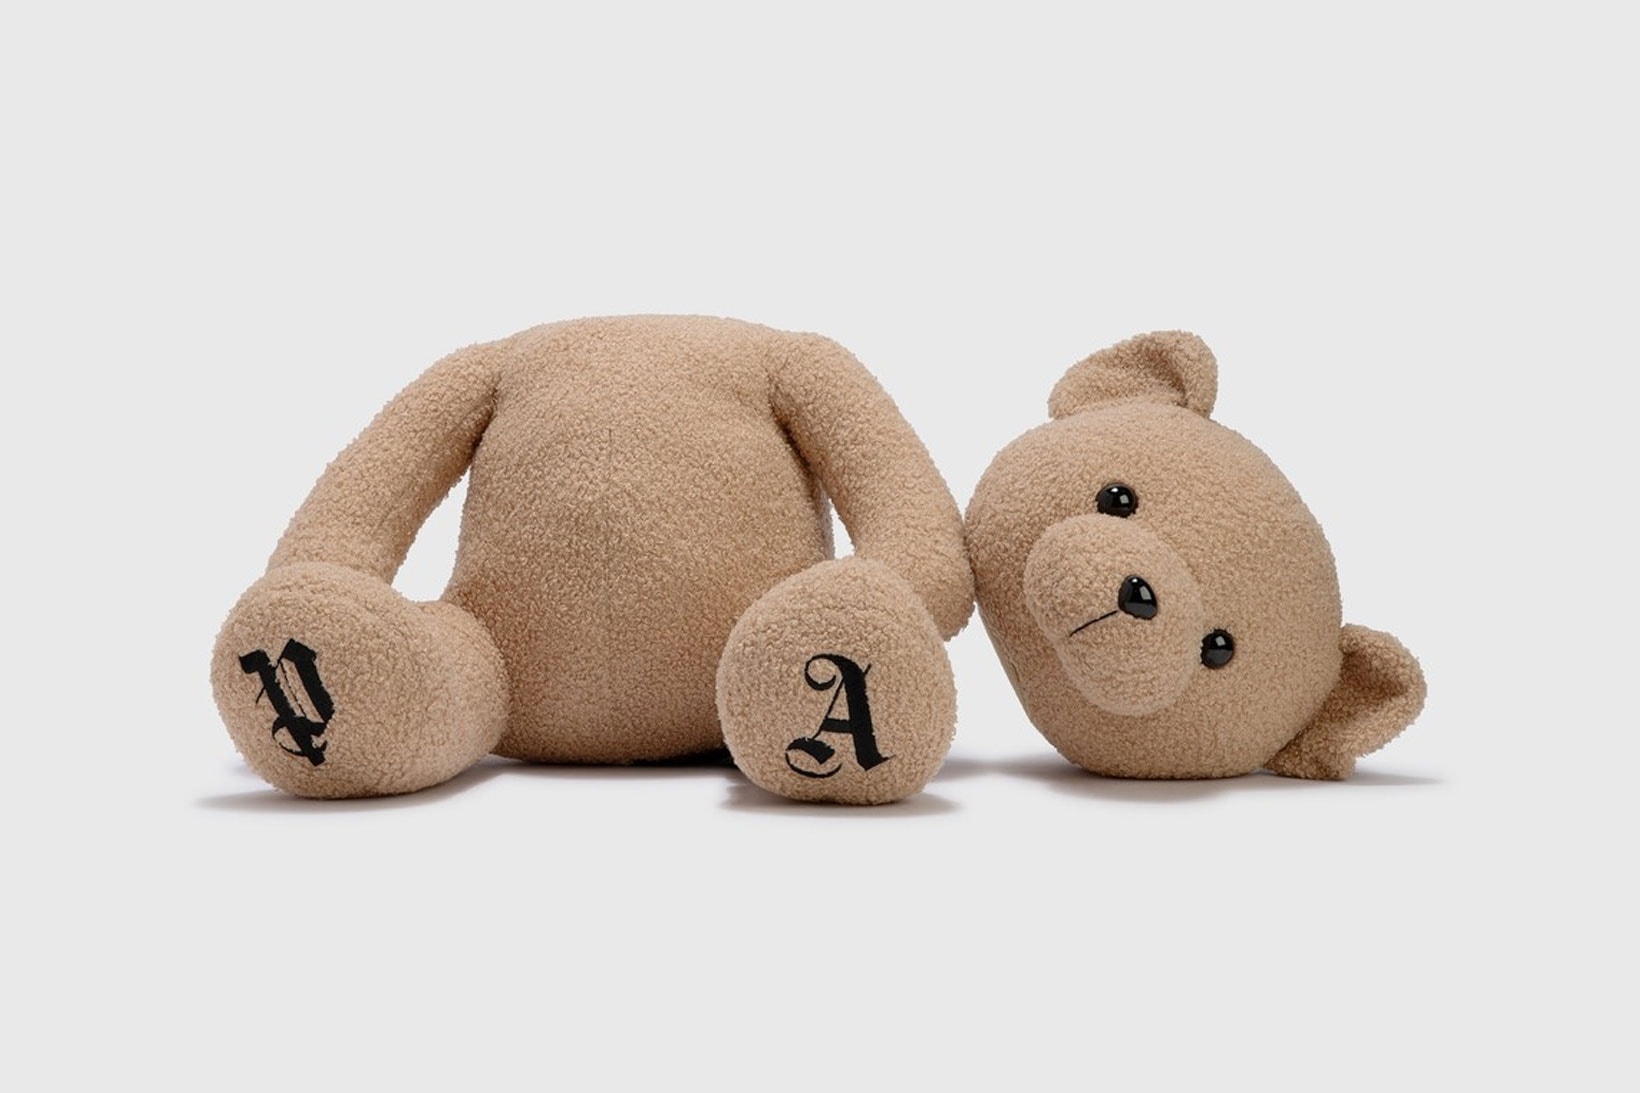 Palm Angels Releases Logo Stuffed Teddy Bear